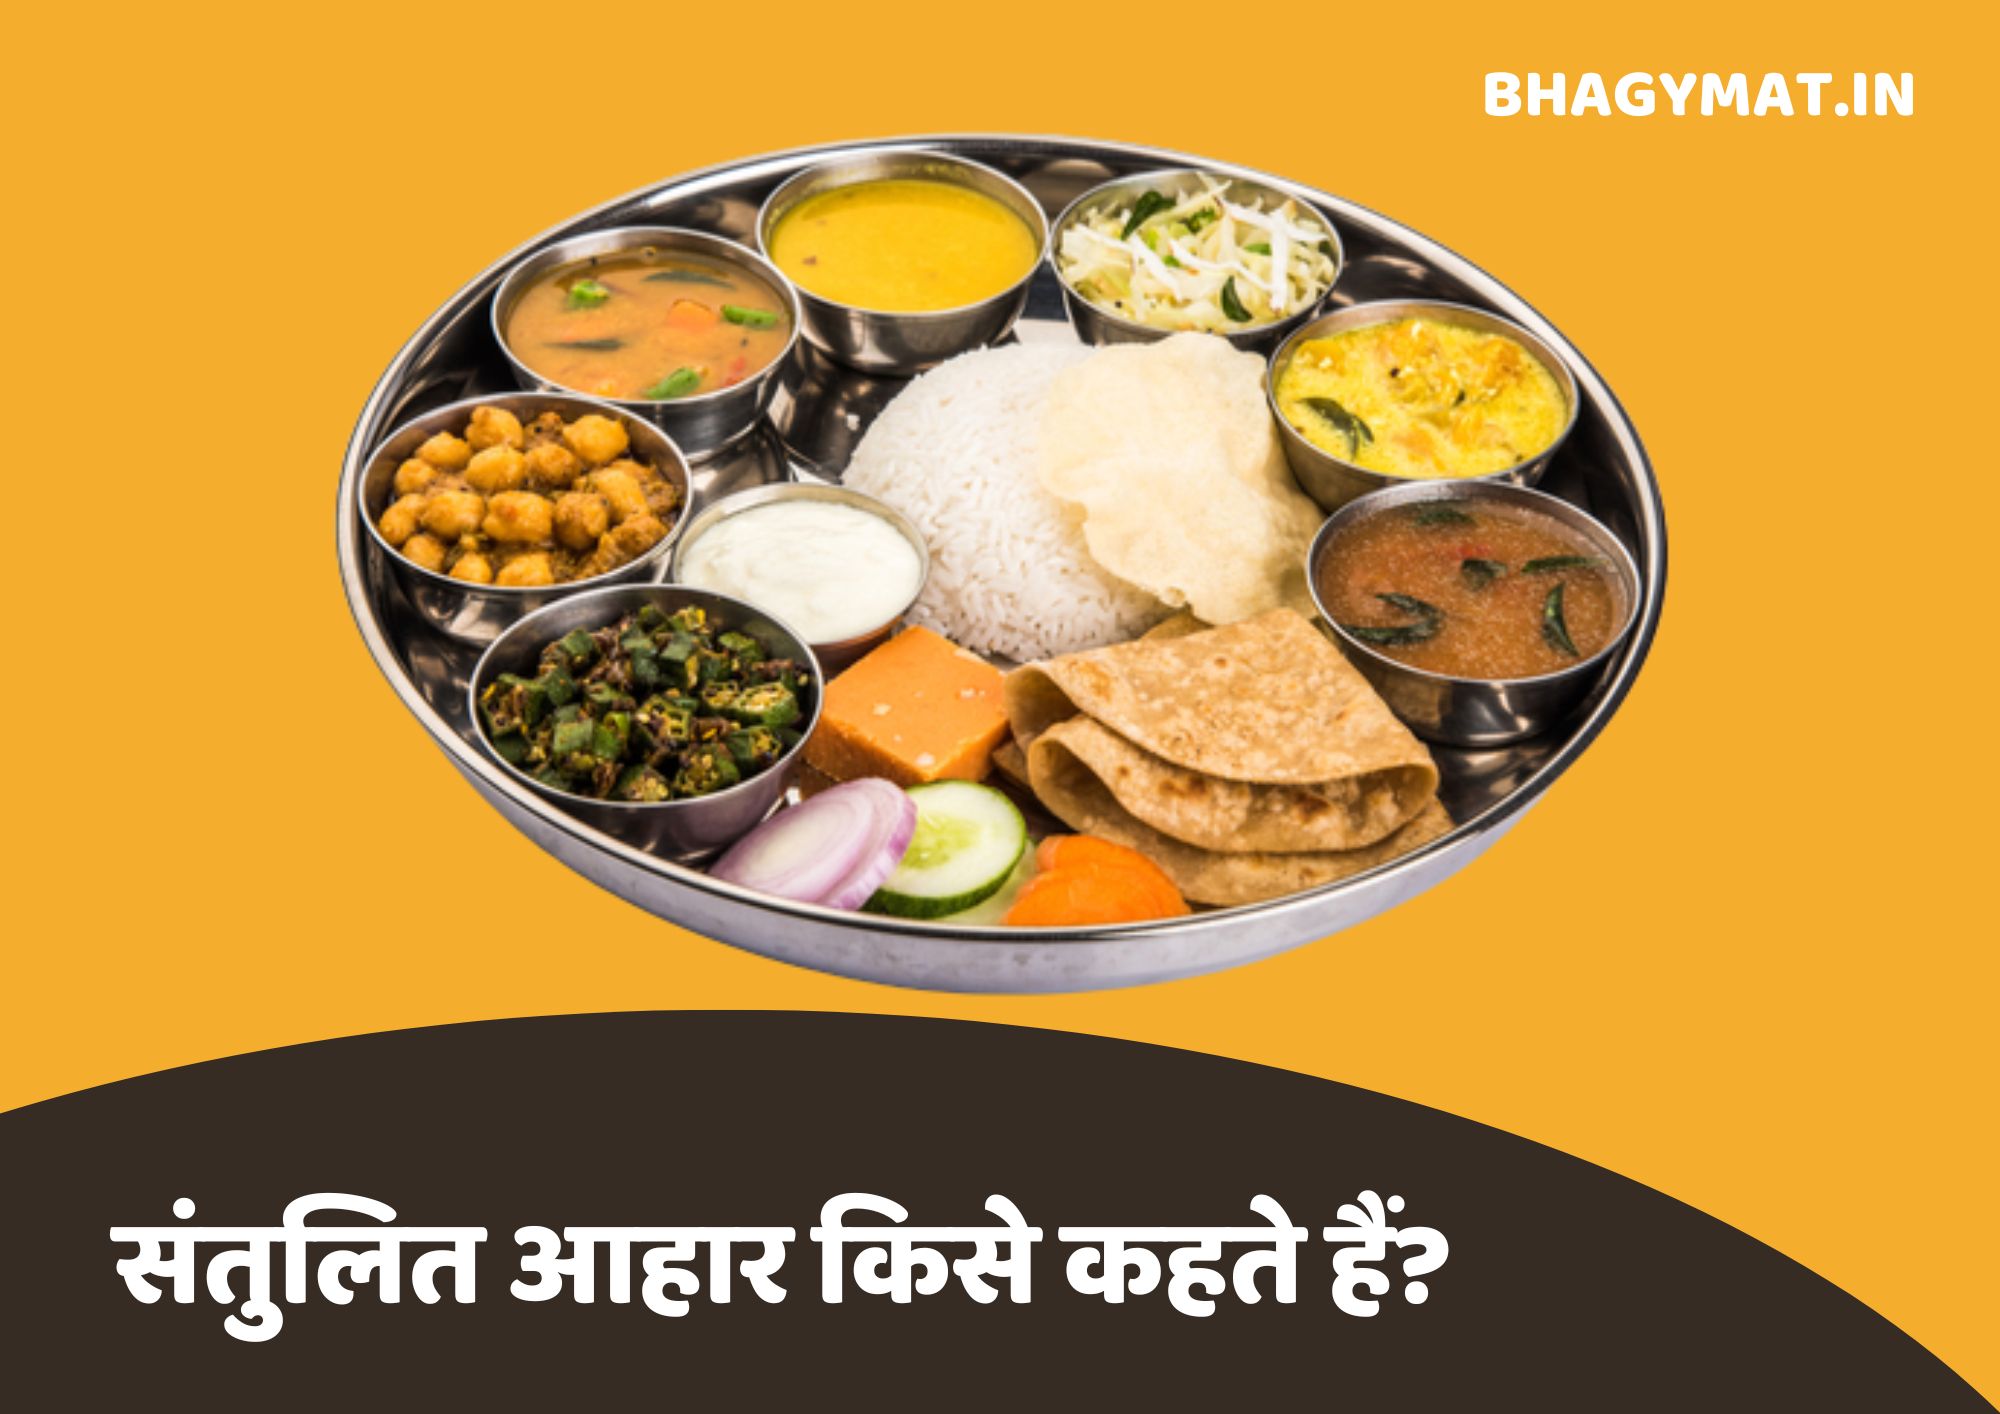 संतुलित आहार किसे कहते हैं, संतुलित आहार क्या है और संतुलित भोजन चार्ट - Santulit Aahar Kise Kahate Hain